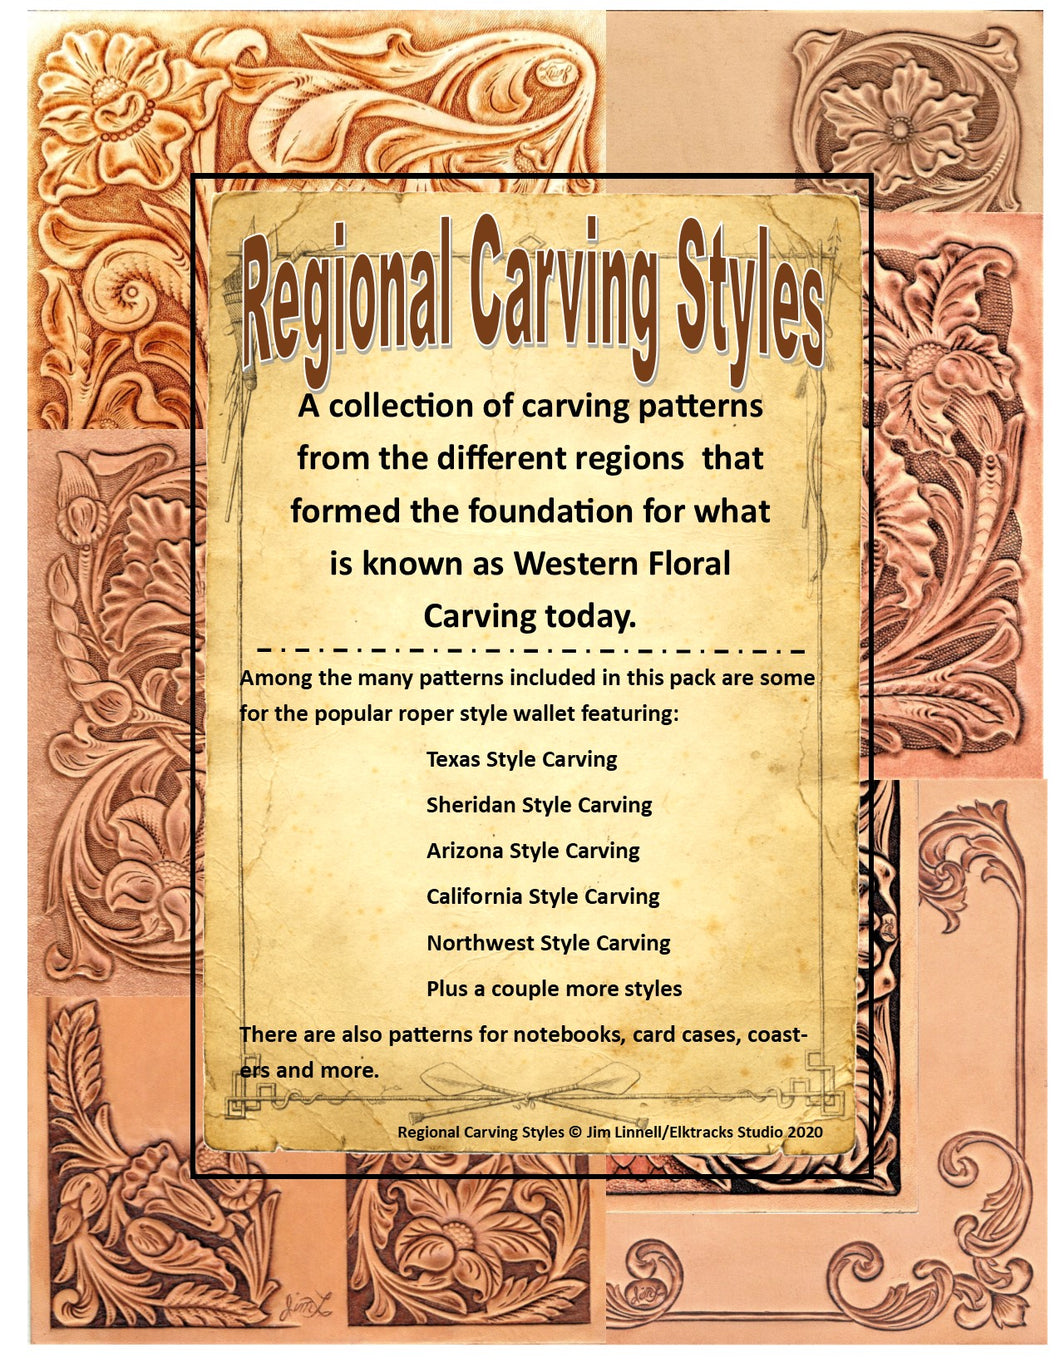 Regional Carving Styles